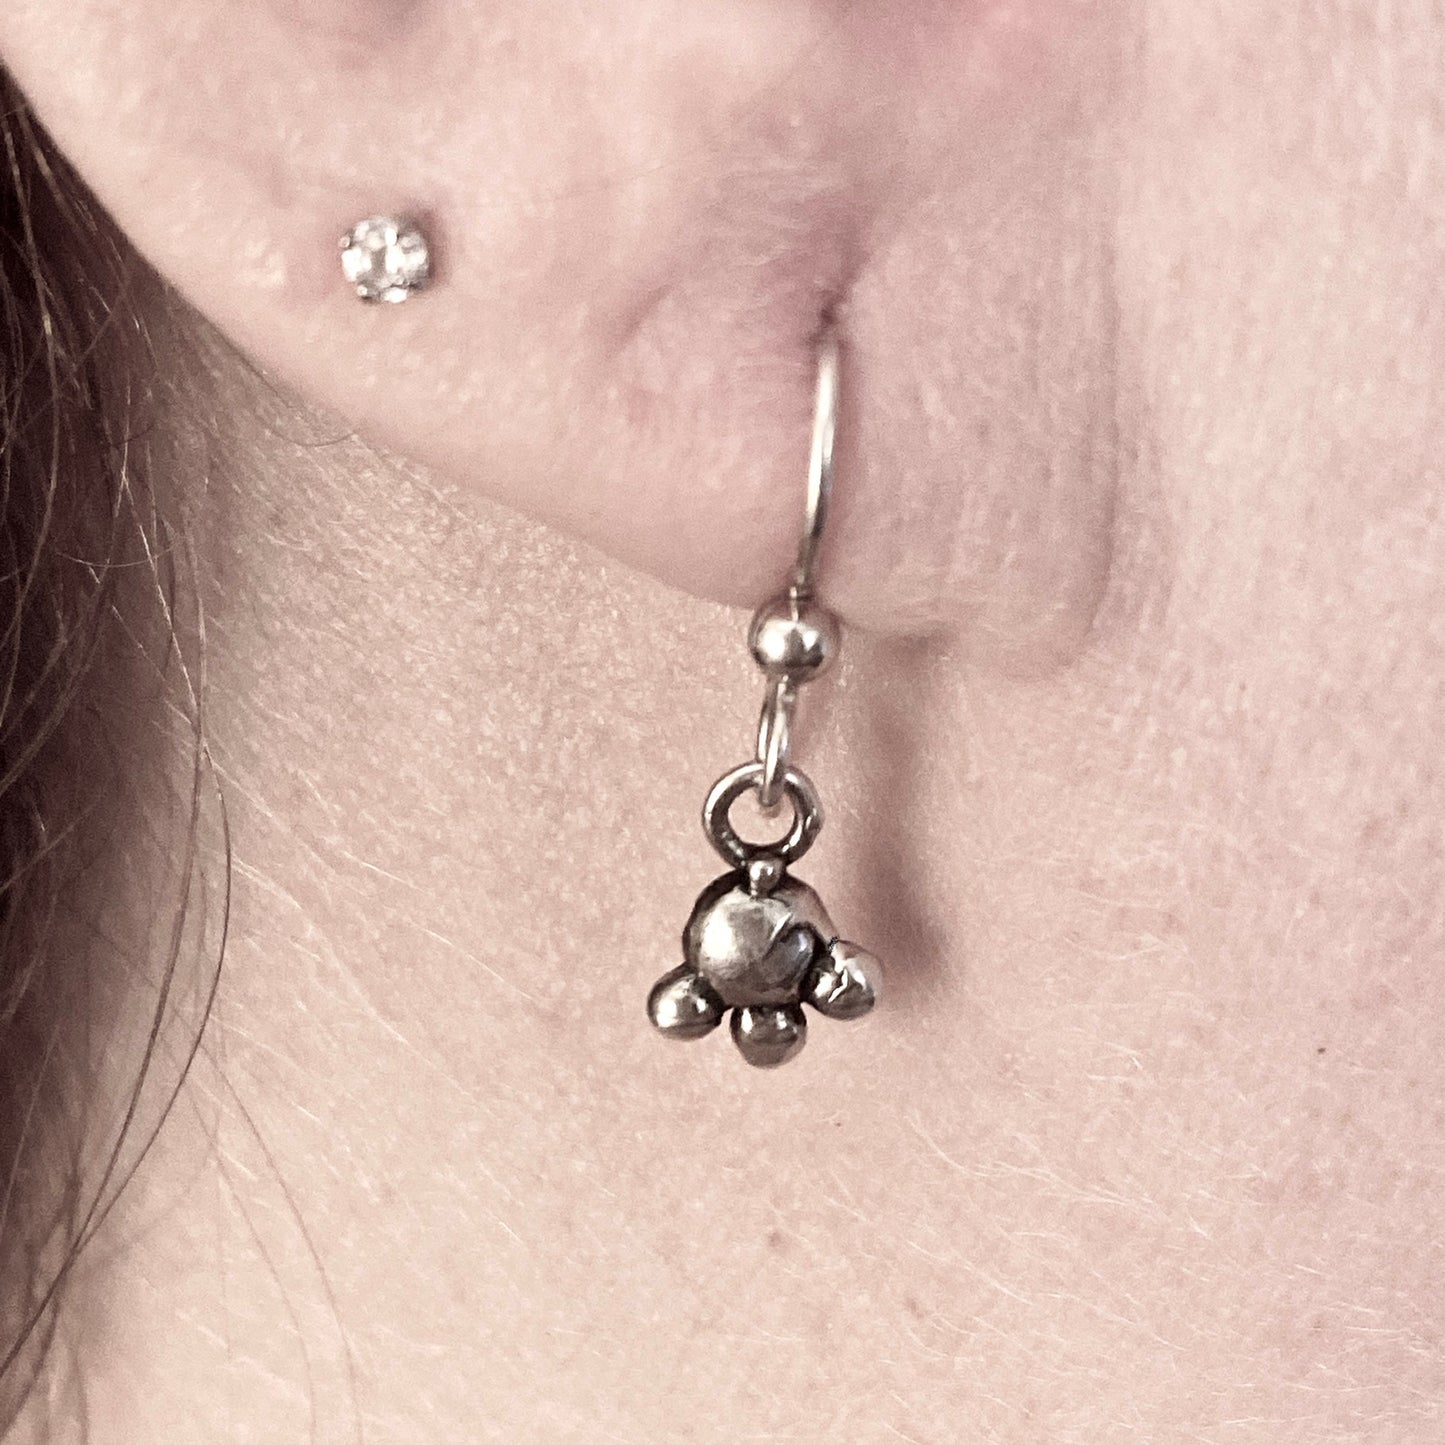 Susiewanna earrings on French hooks